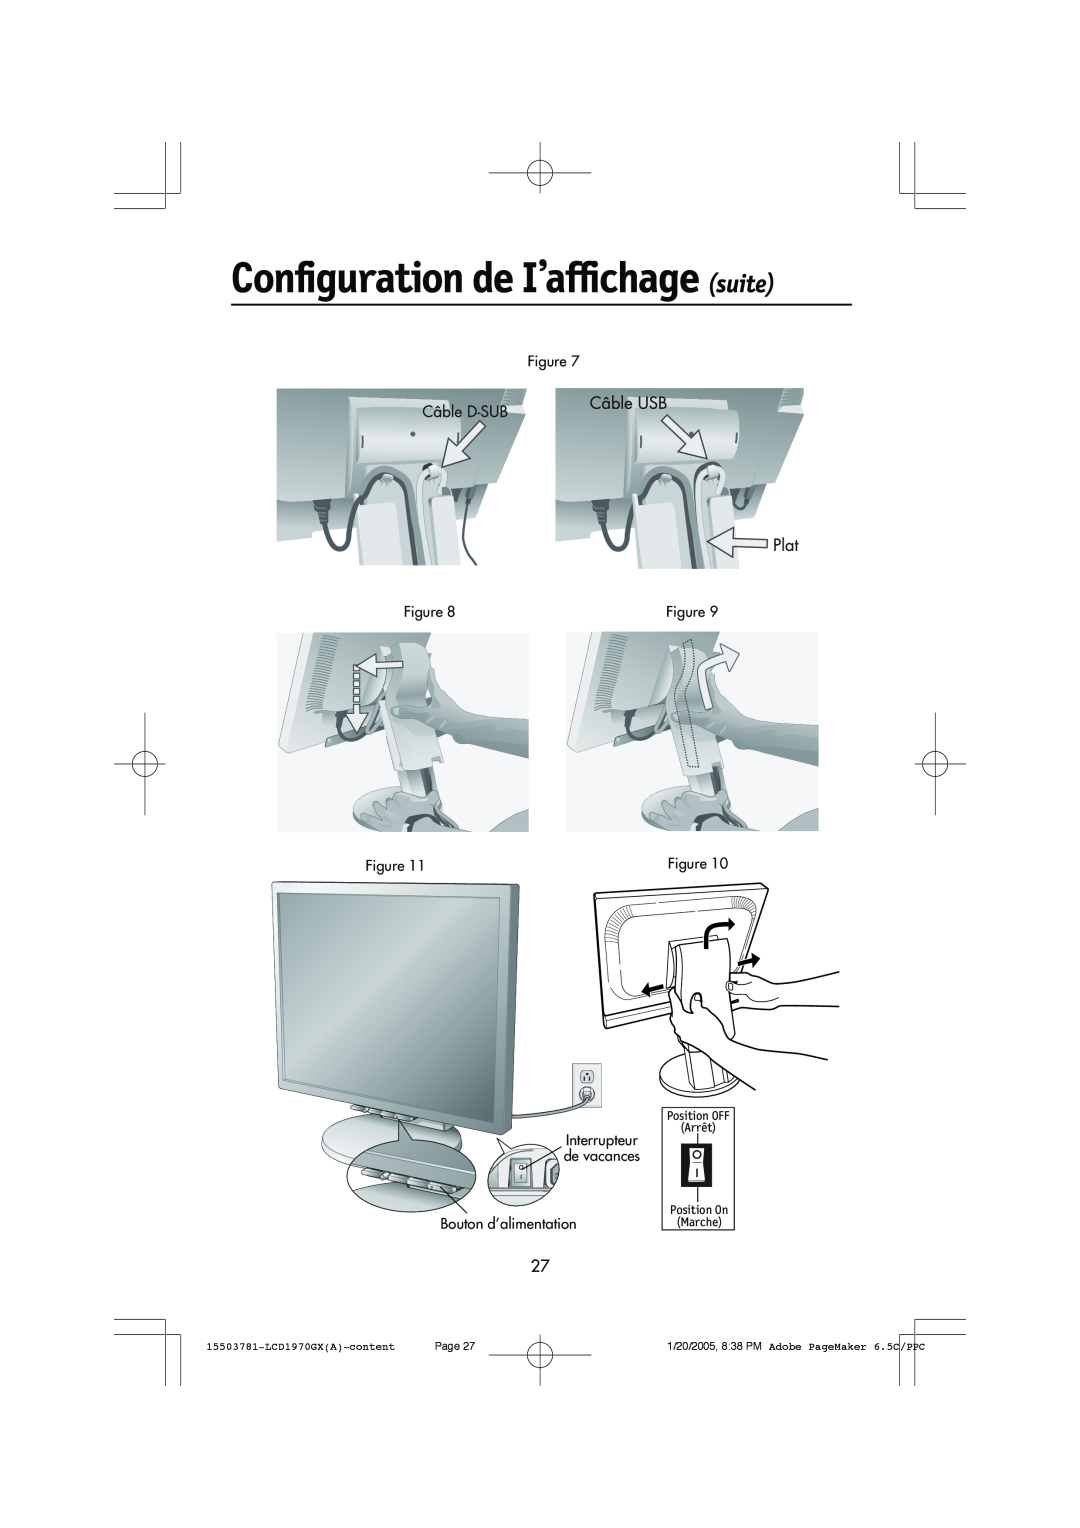 NEC user manual Configuration de I’affichage suite, Position On Marche, 15503781-LCD1970GXA-content, Page 